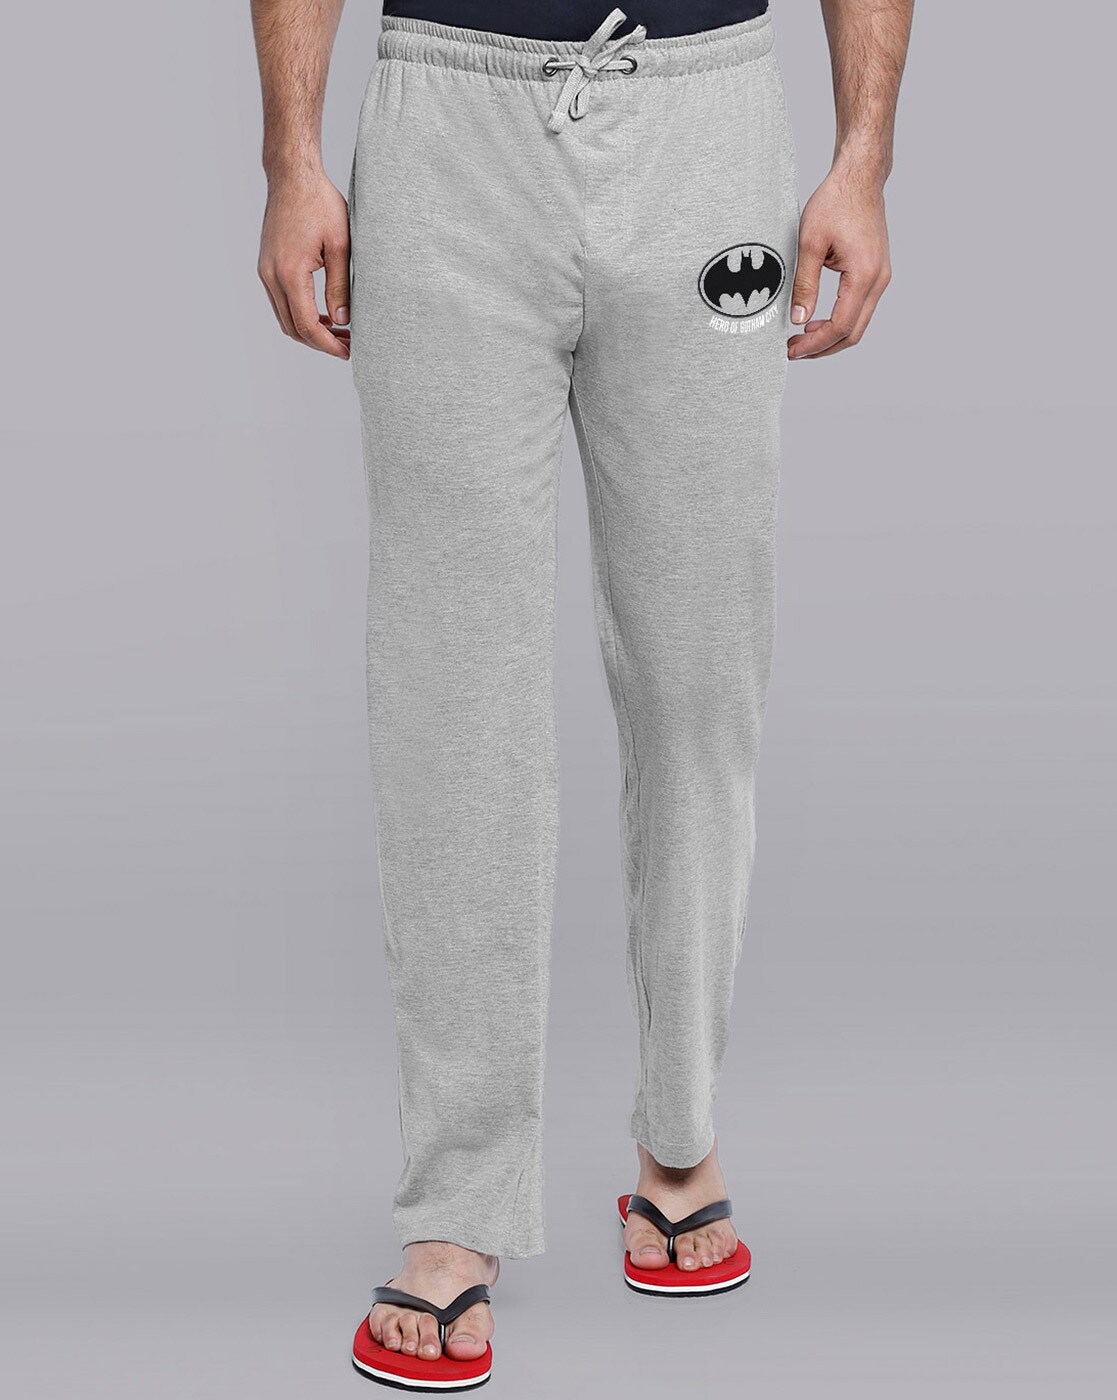 Batman | Intimates & Sleepwear | Batman Lounge Pants | Poshmark